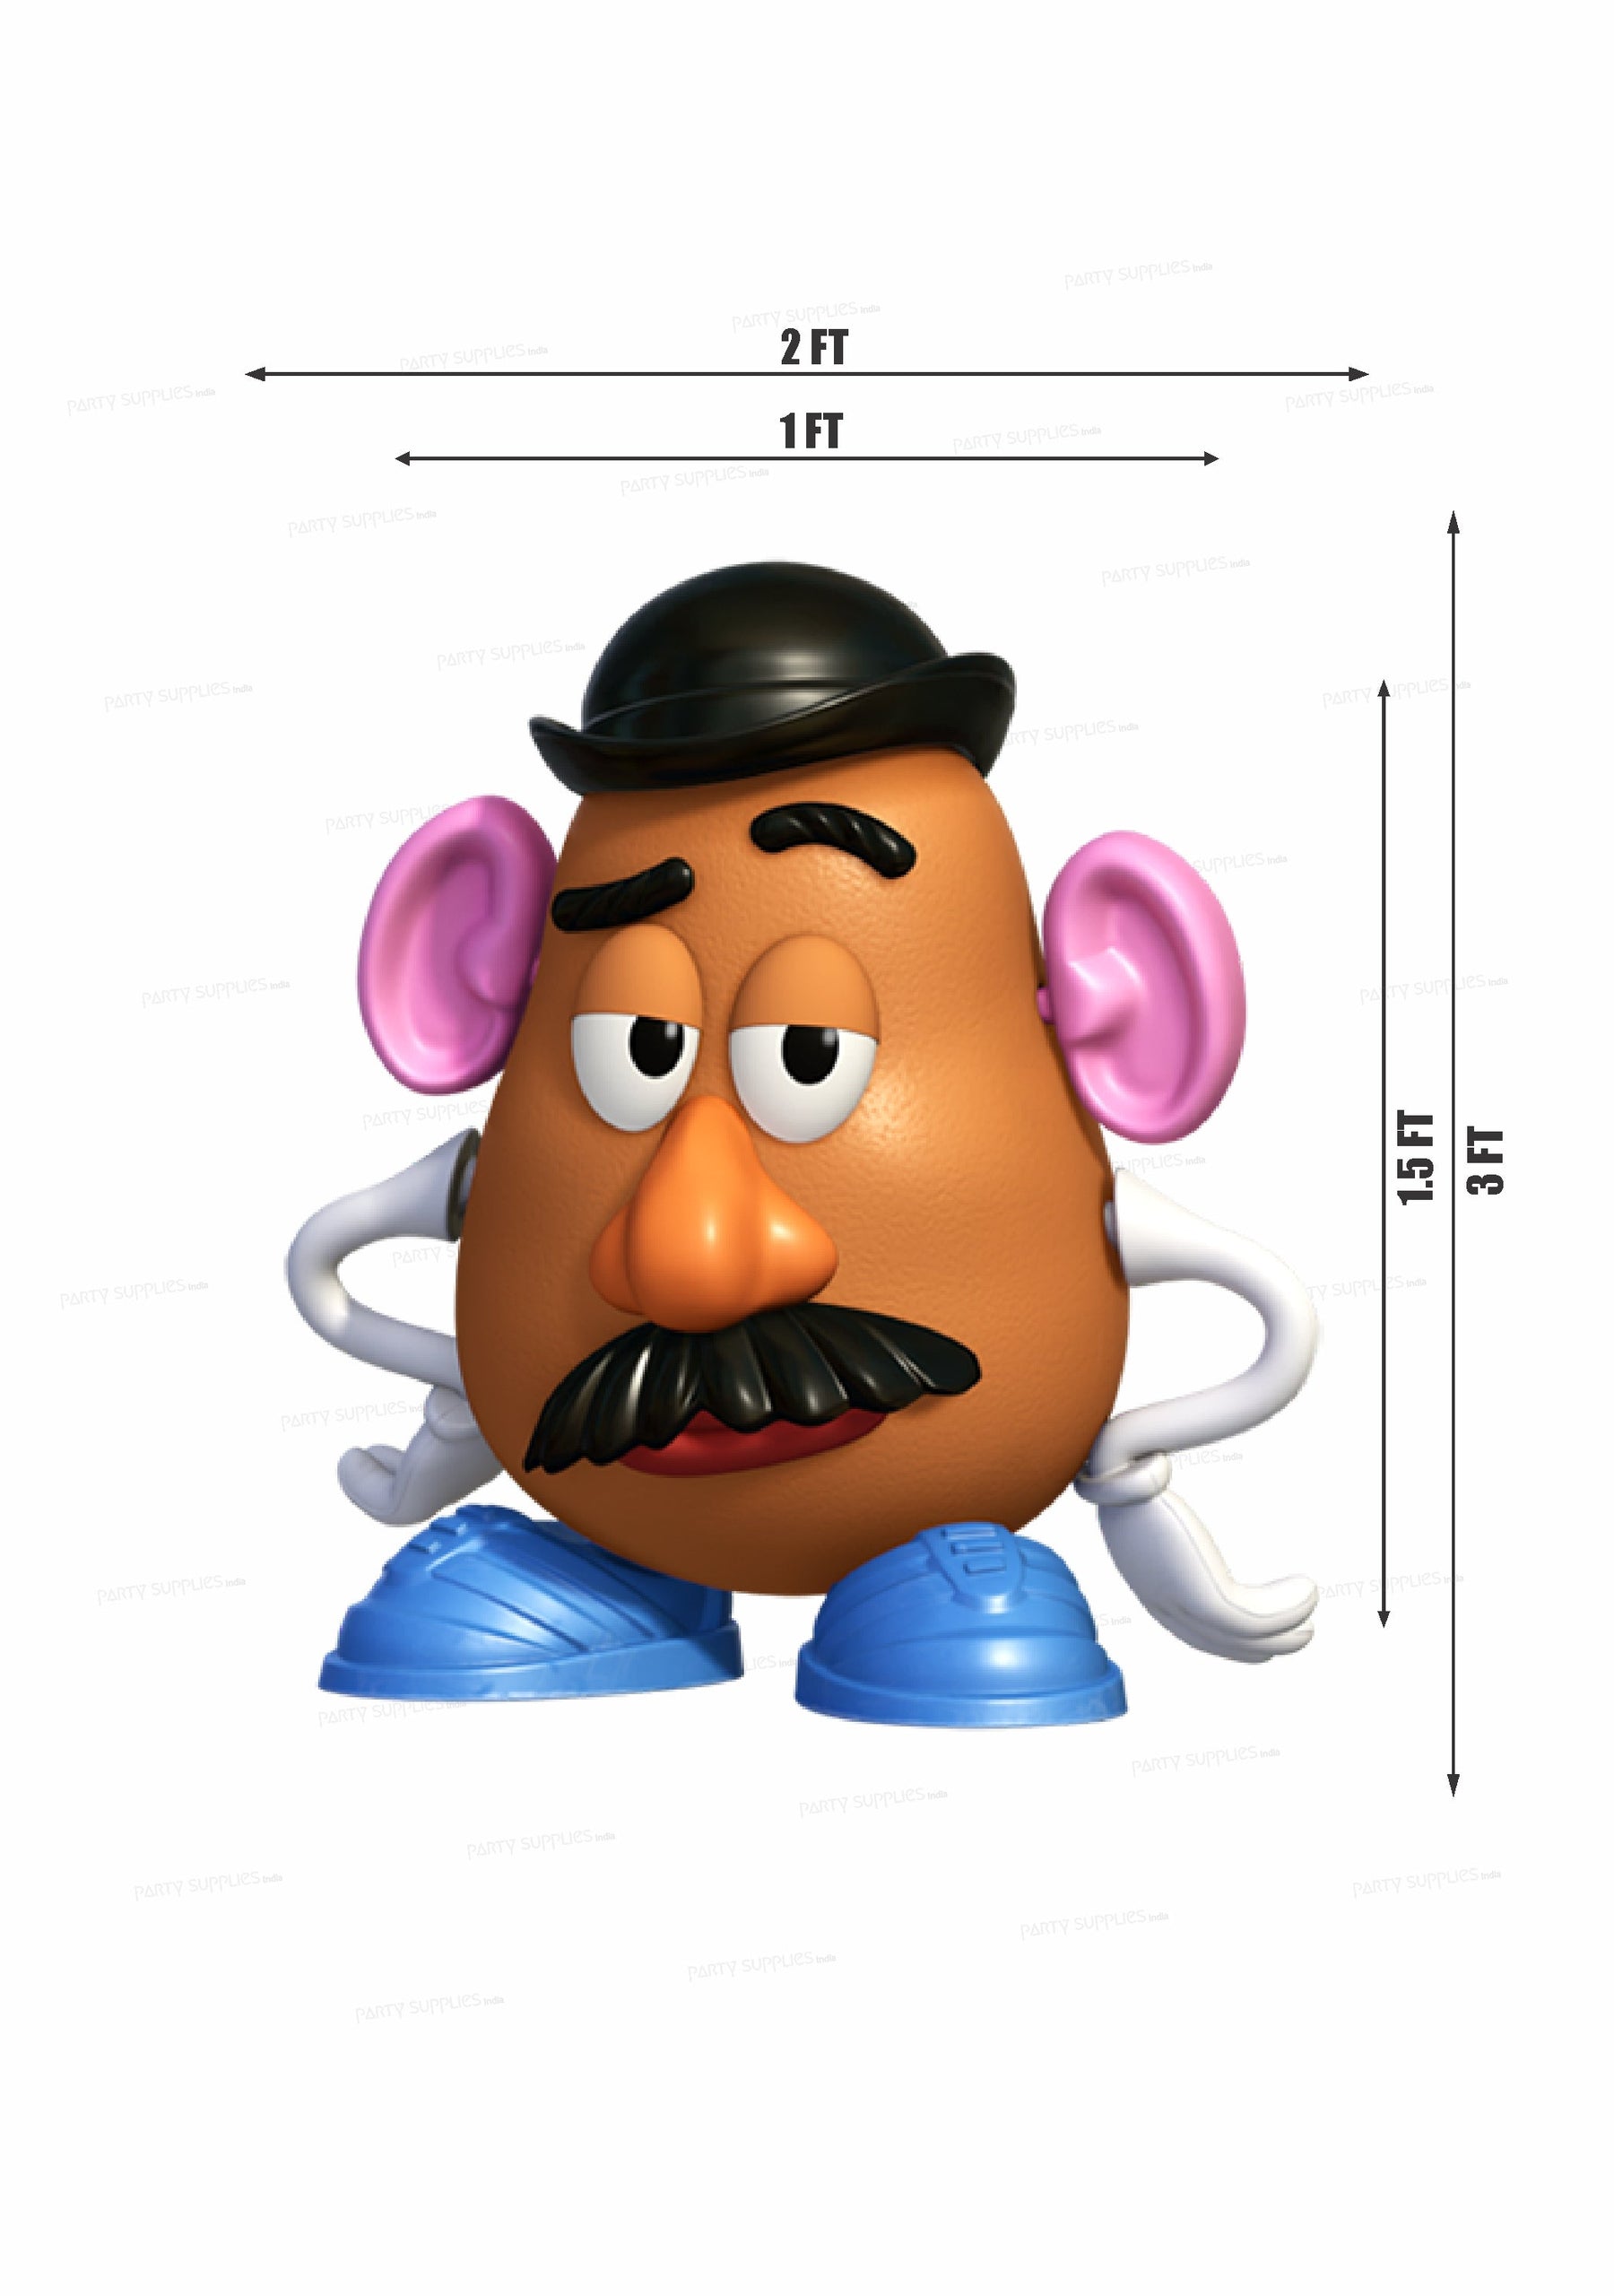 PSI Toy Story Theme Cutout - 11